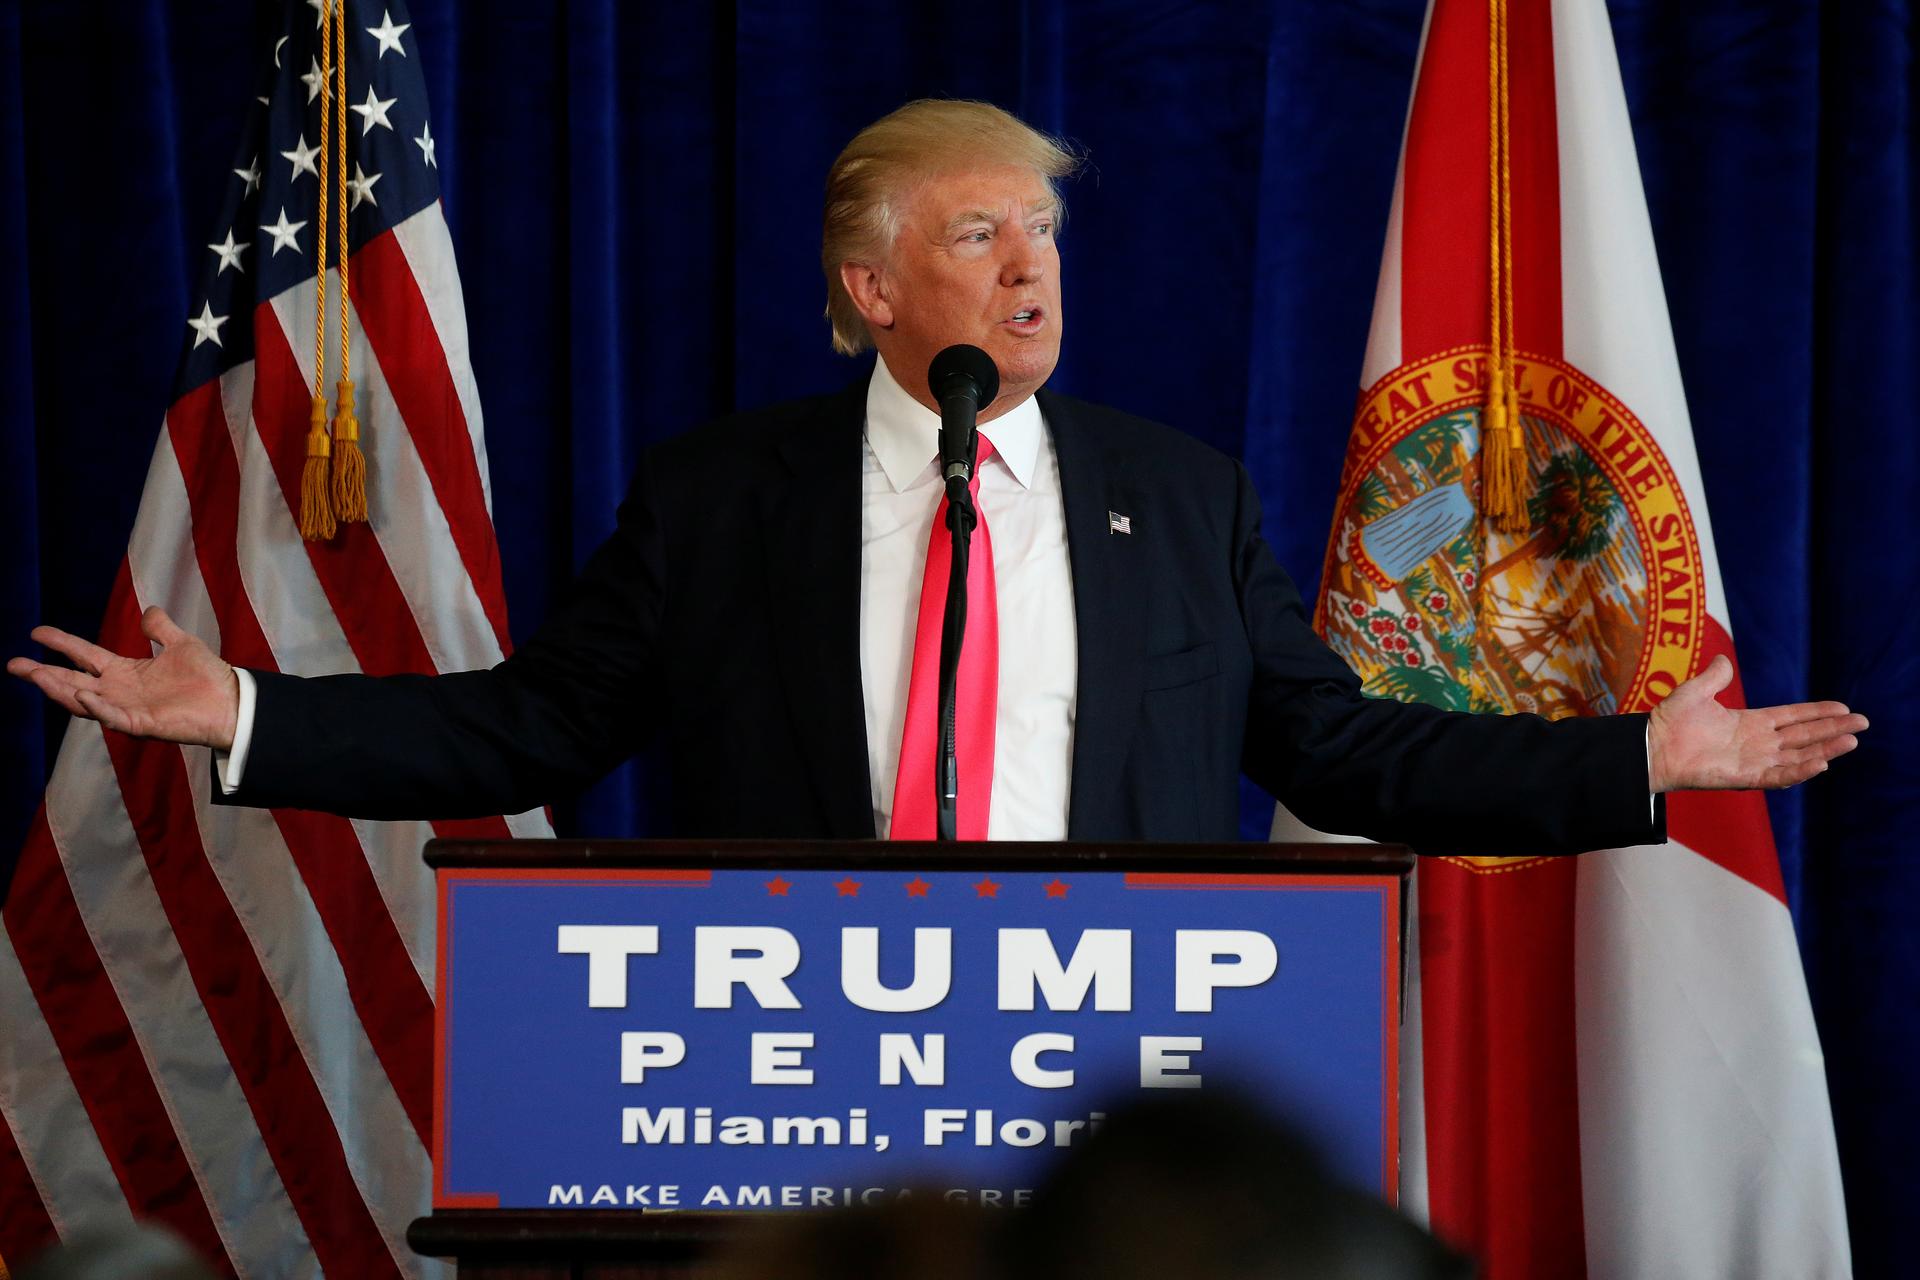 Republican presidential nominee Donald Trump speaks at a campaign event at Trump Doral golf course in Miami, Florida, U.S., July 27, 2016.